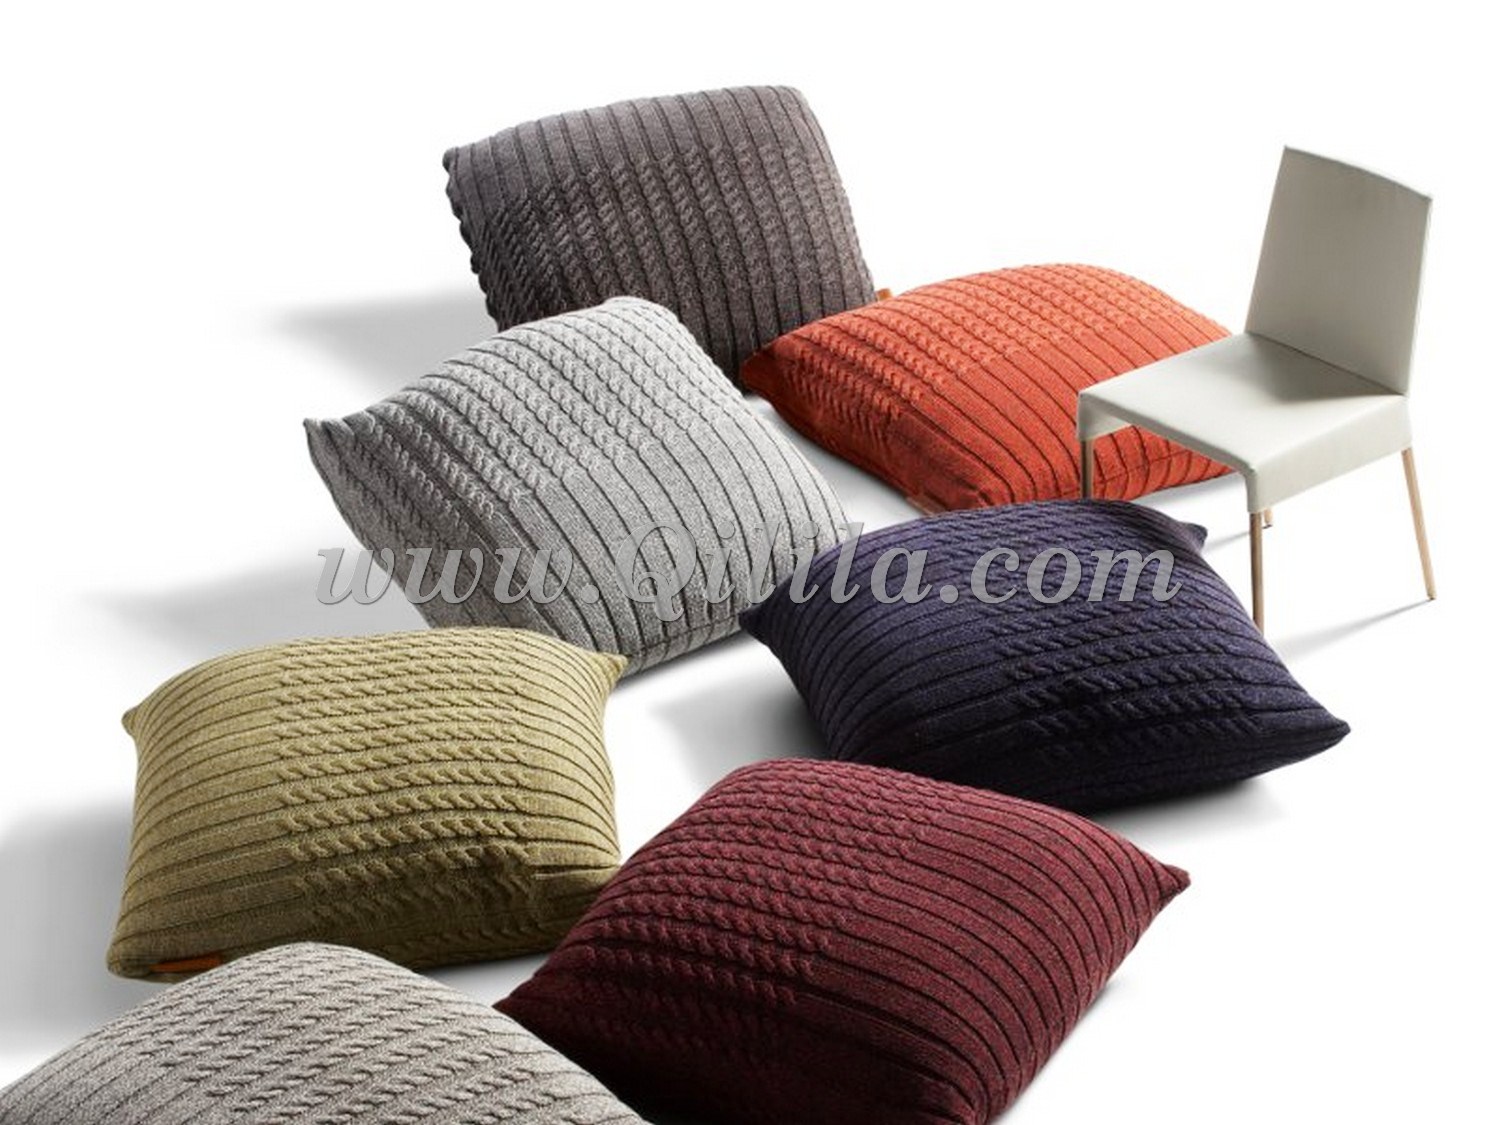 Cushion cover - hand knitting